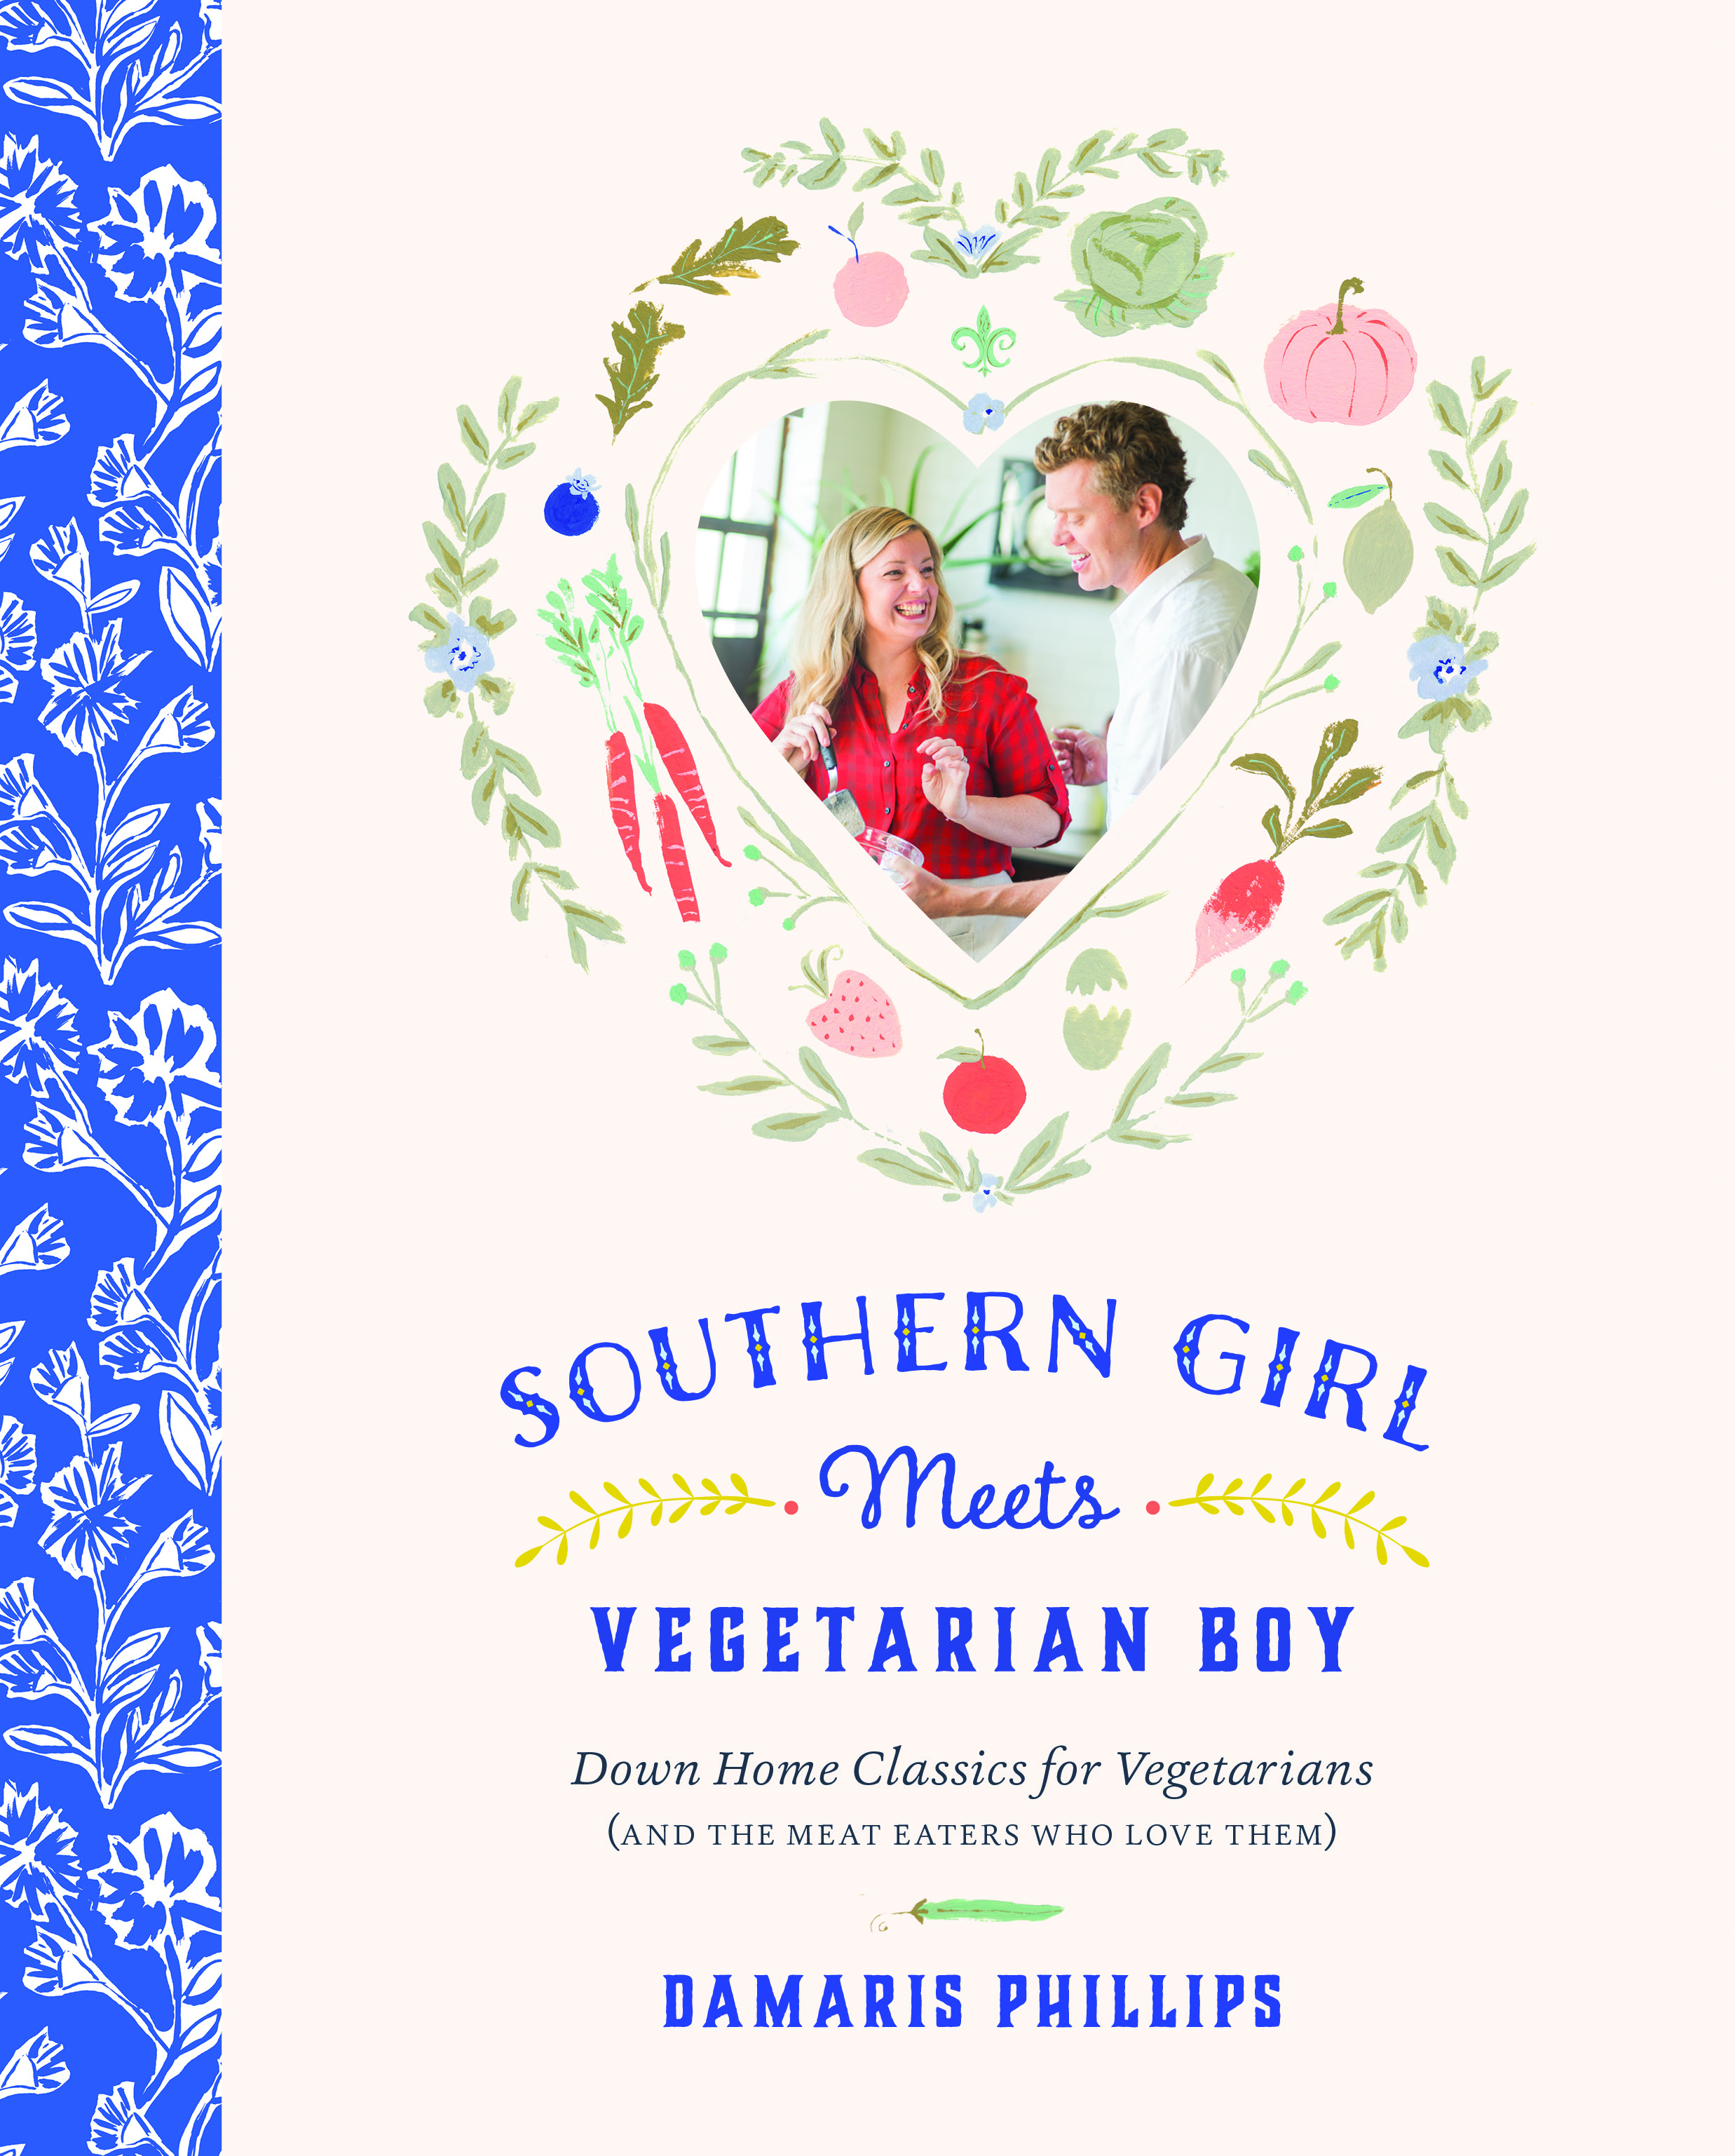 Book Launch: Southern Girl Meets Vegetarian Boy by Damaris Phillips